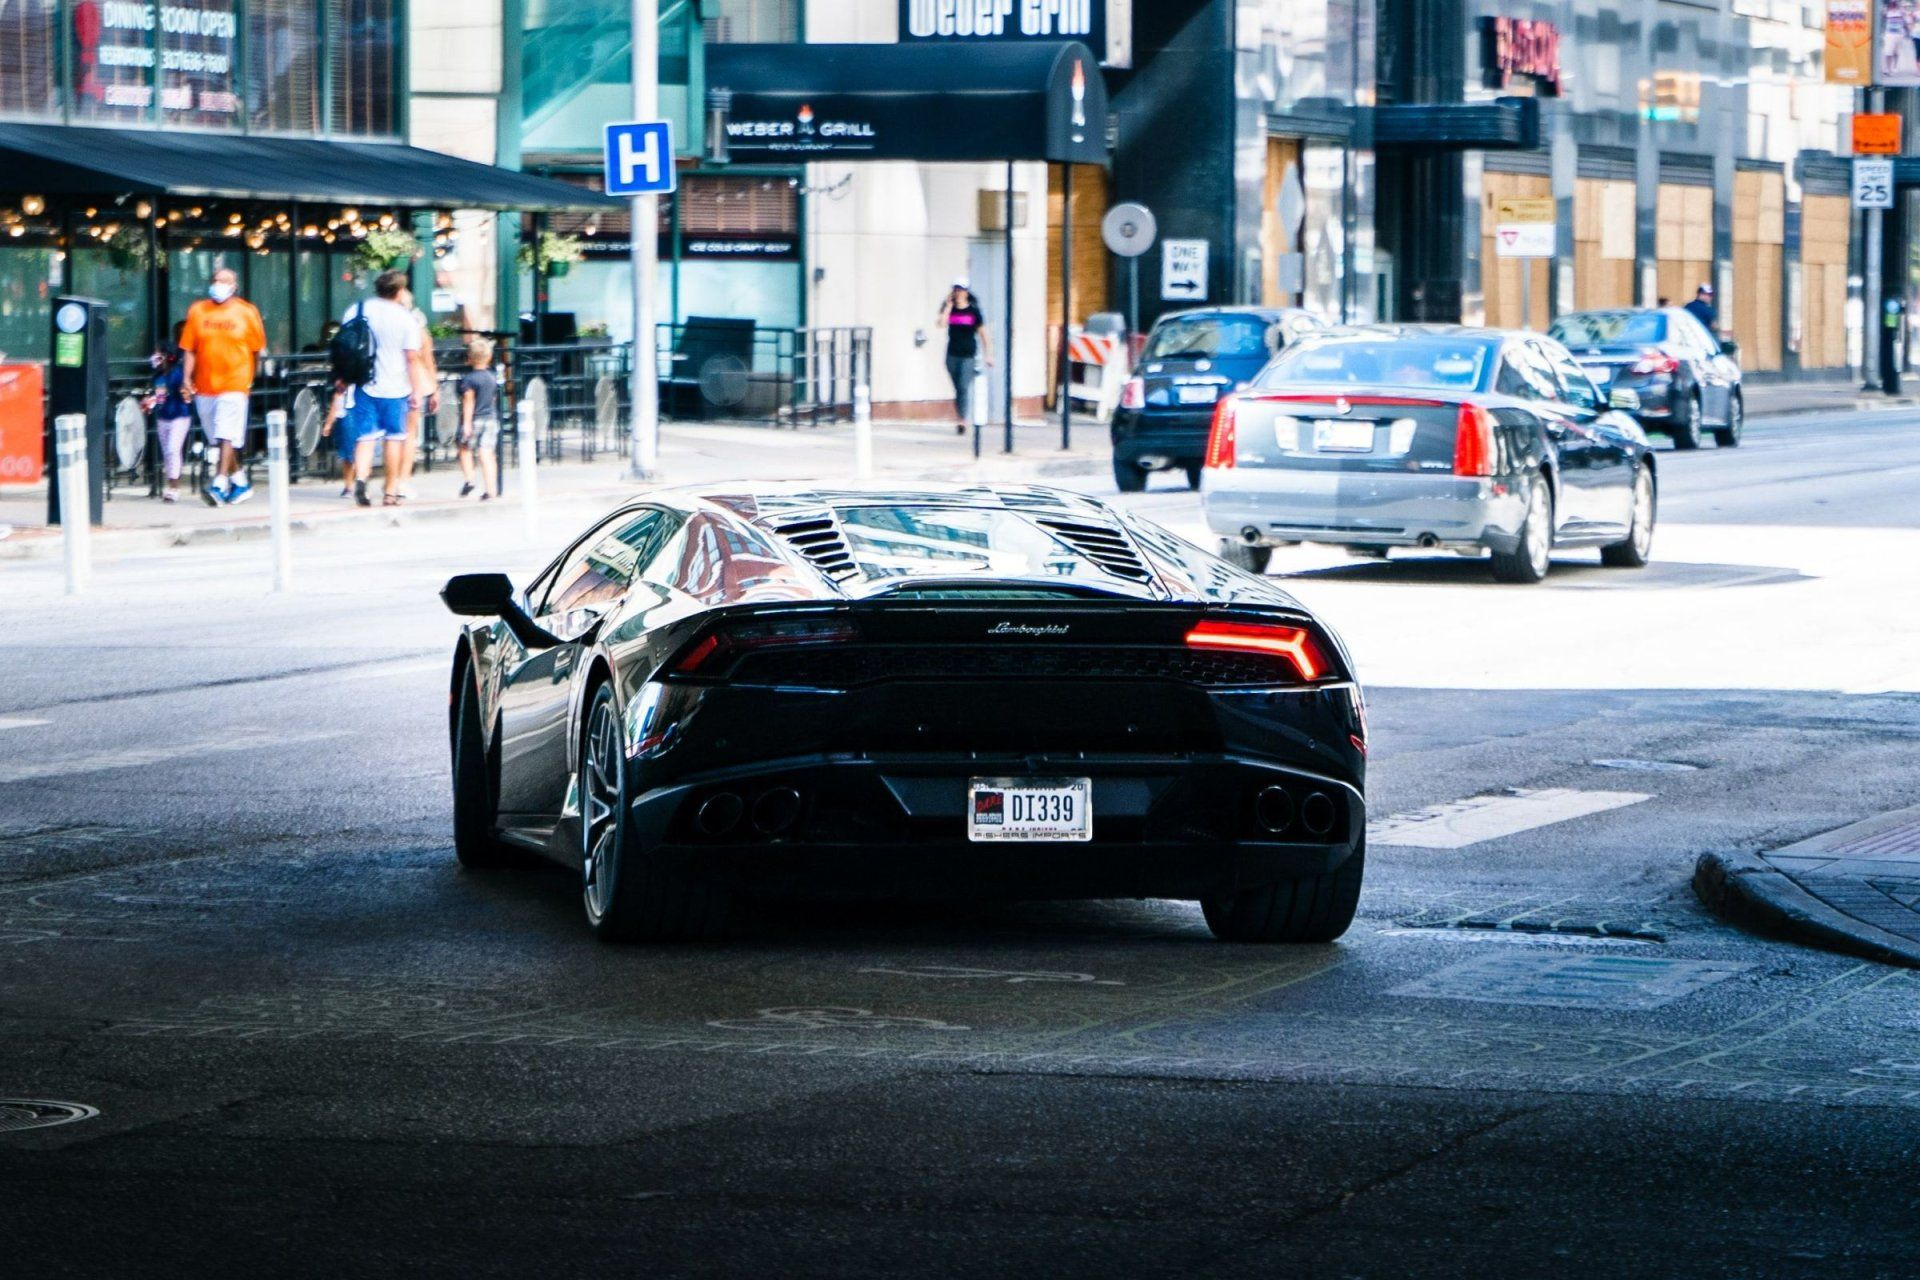 a black lamborghini is driving down a city street